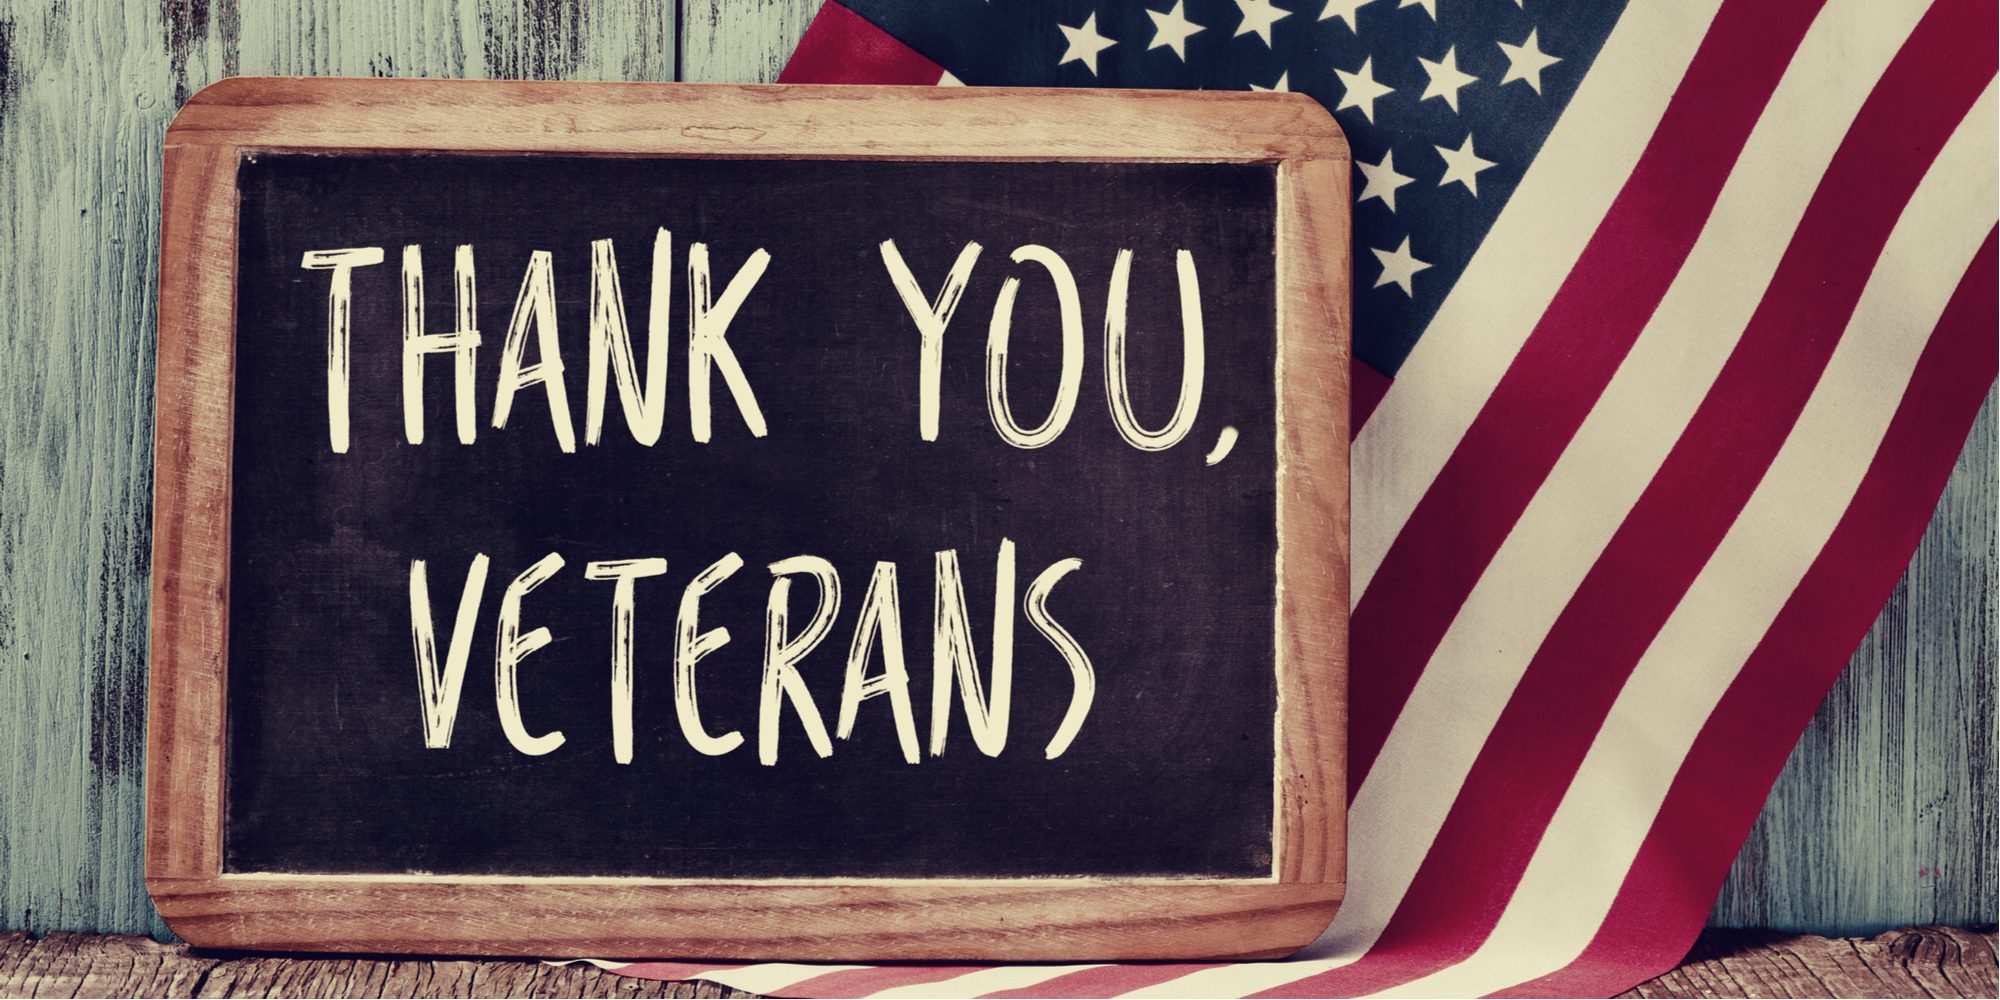 20 Veteran Quotes to Uplift Veterans